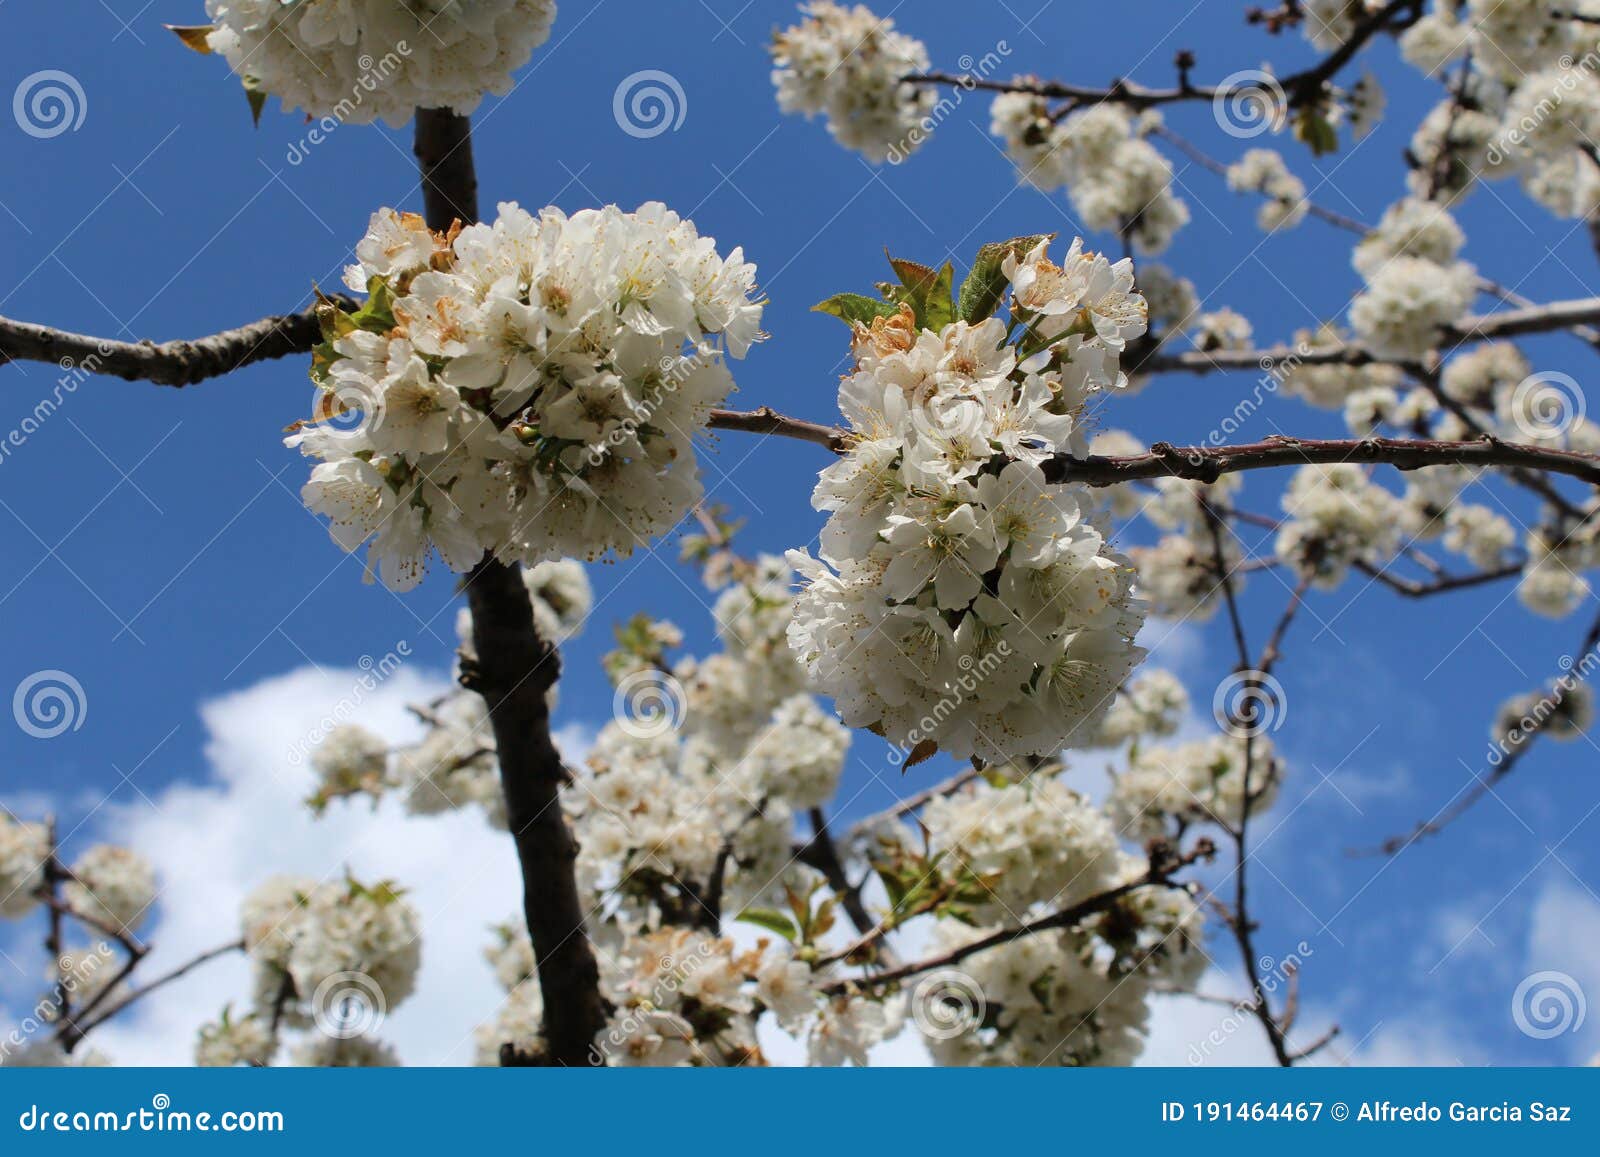 cherry blossom at jerte valley, cerezos en flor valle del jerte. cherry blossom flowers are in bloom.